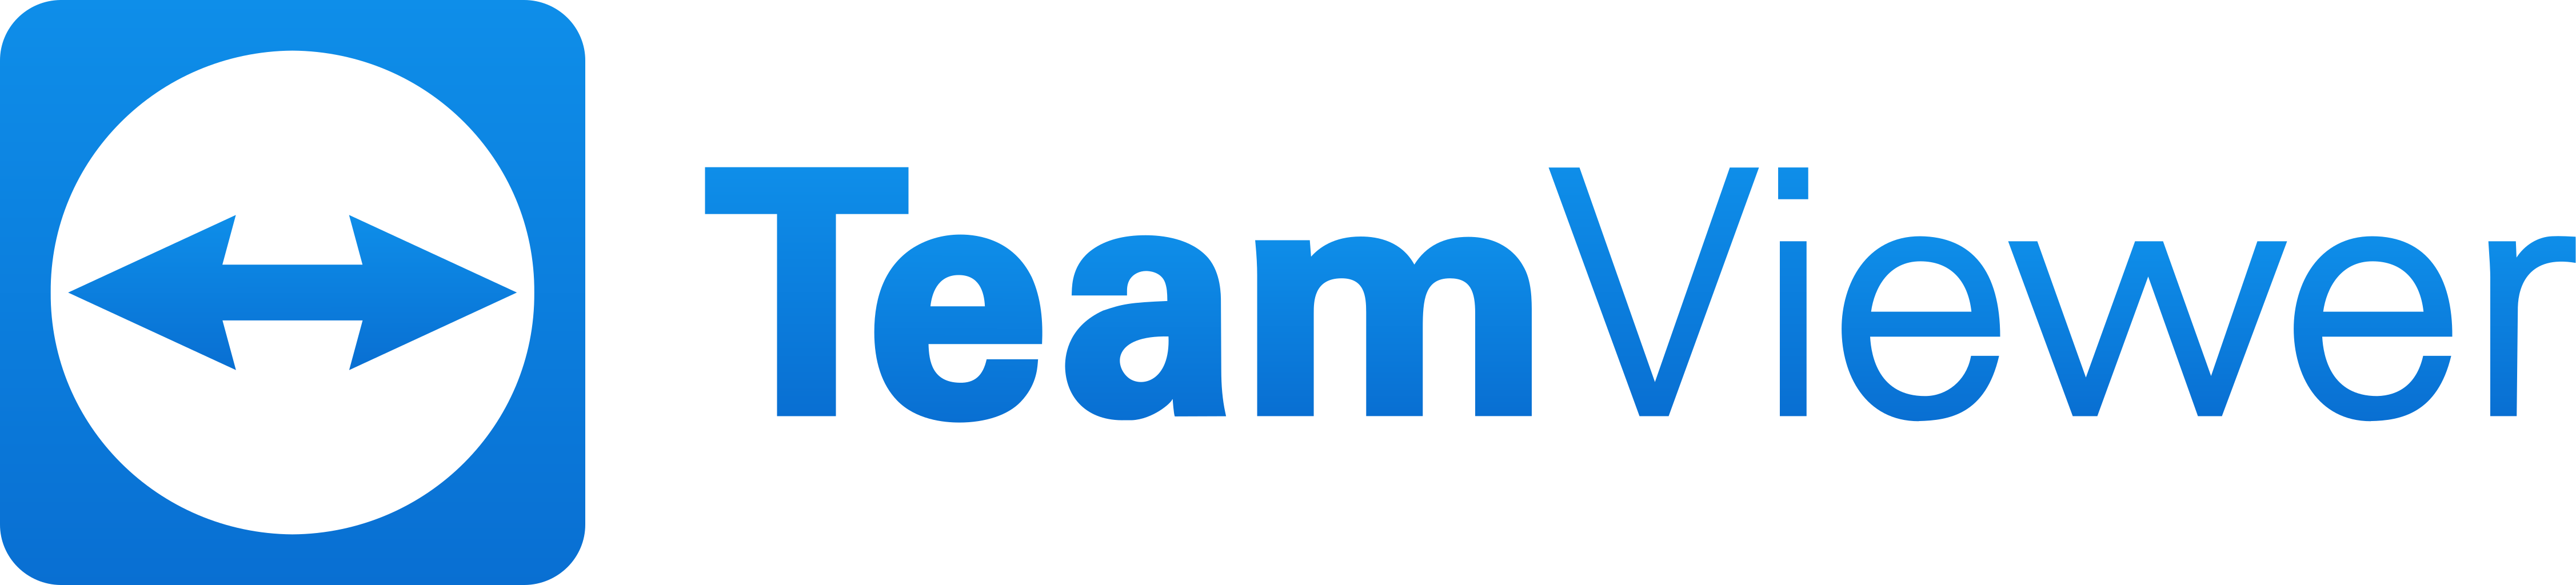 4507px-TeamViewer_logo.svg